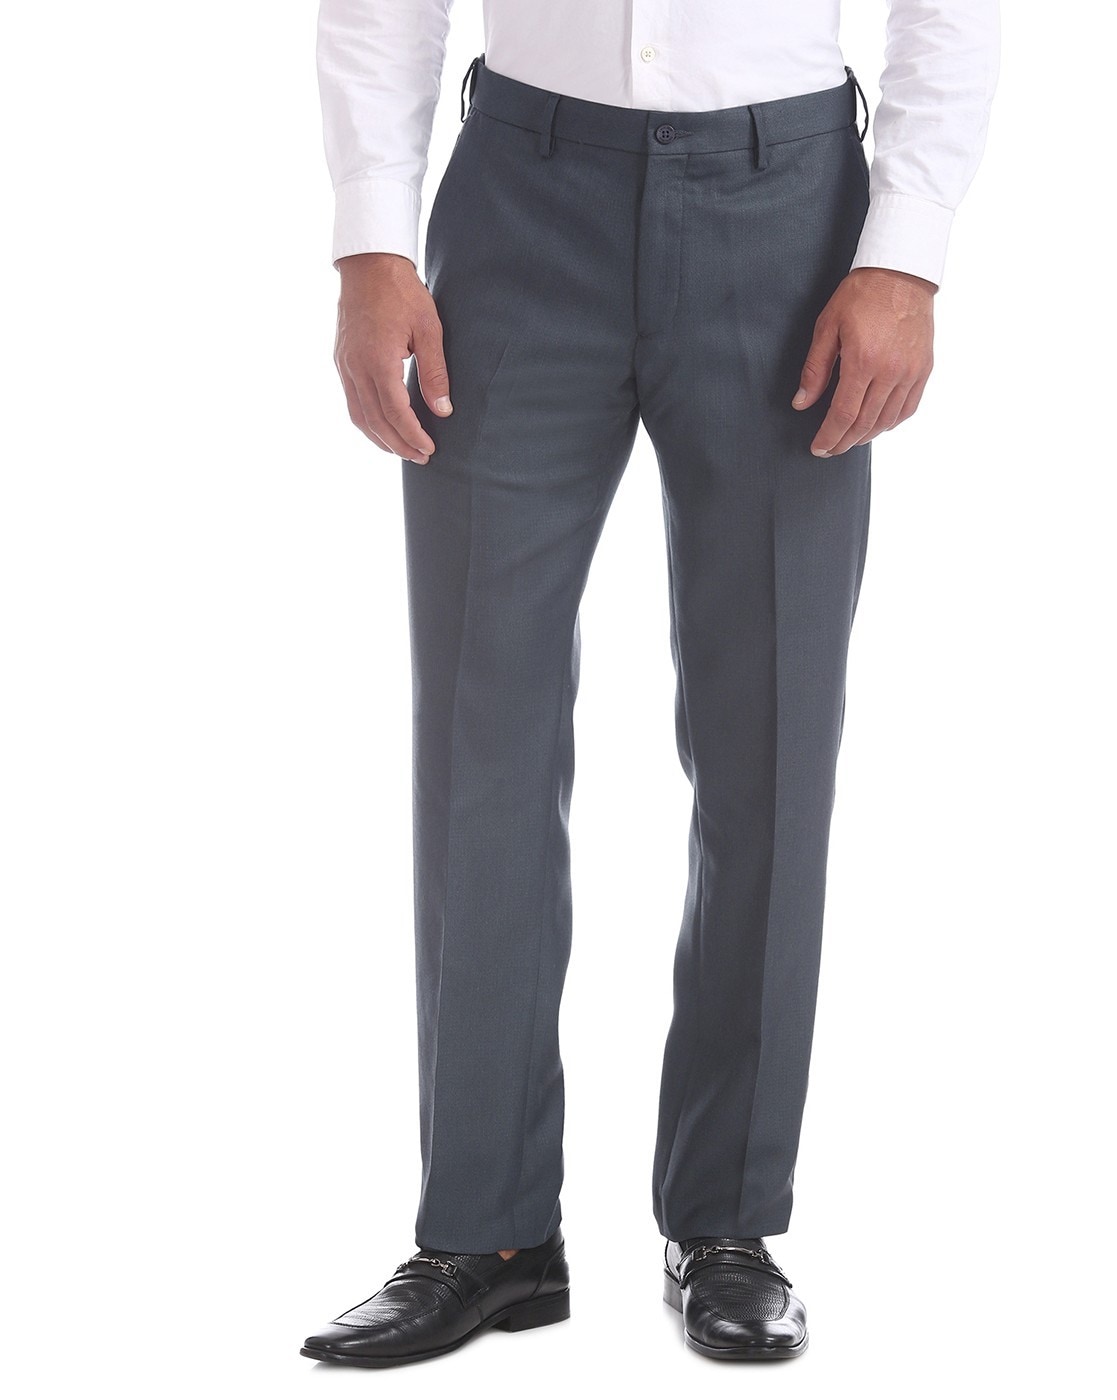 Super Deal) Excalibur Men's Fit Trousers @ Just ₹299 | 70% Off